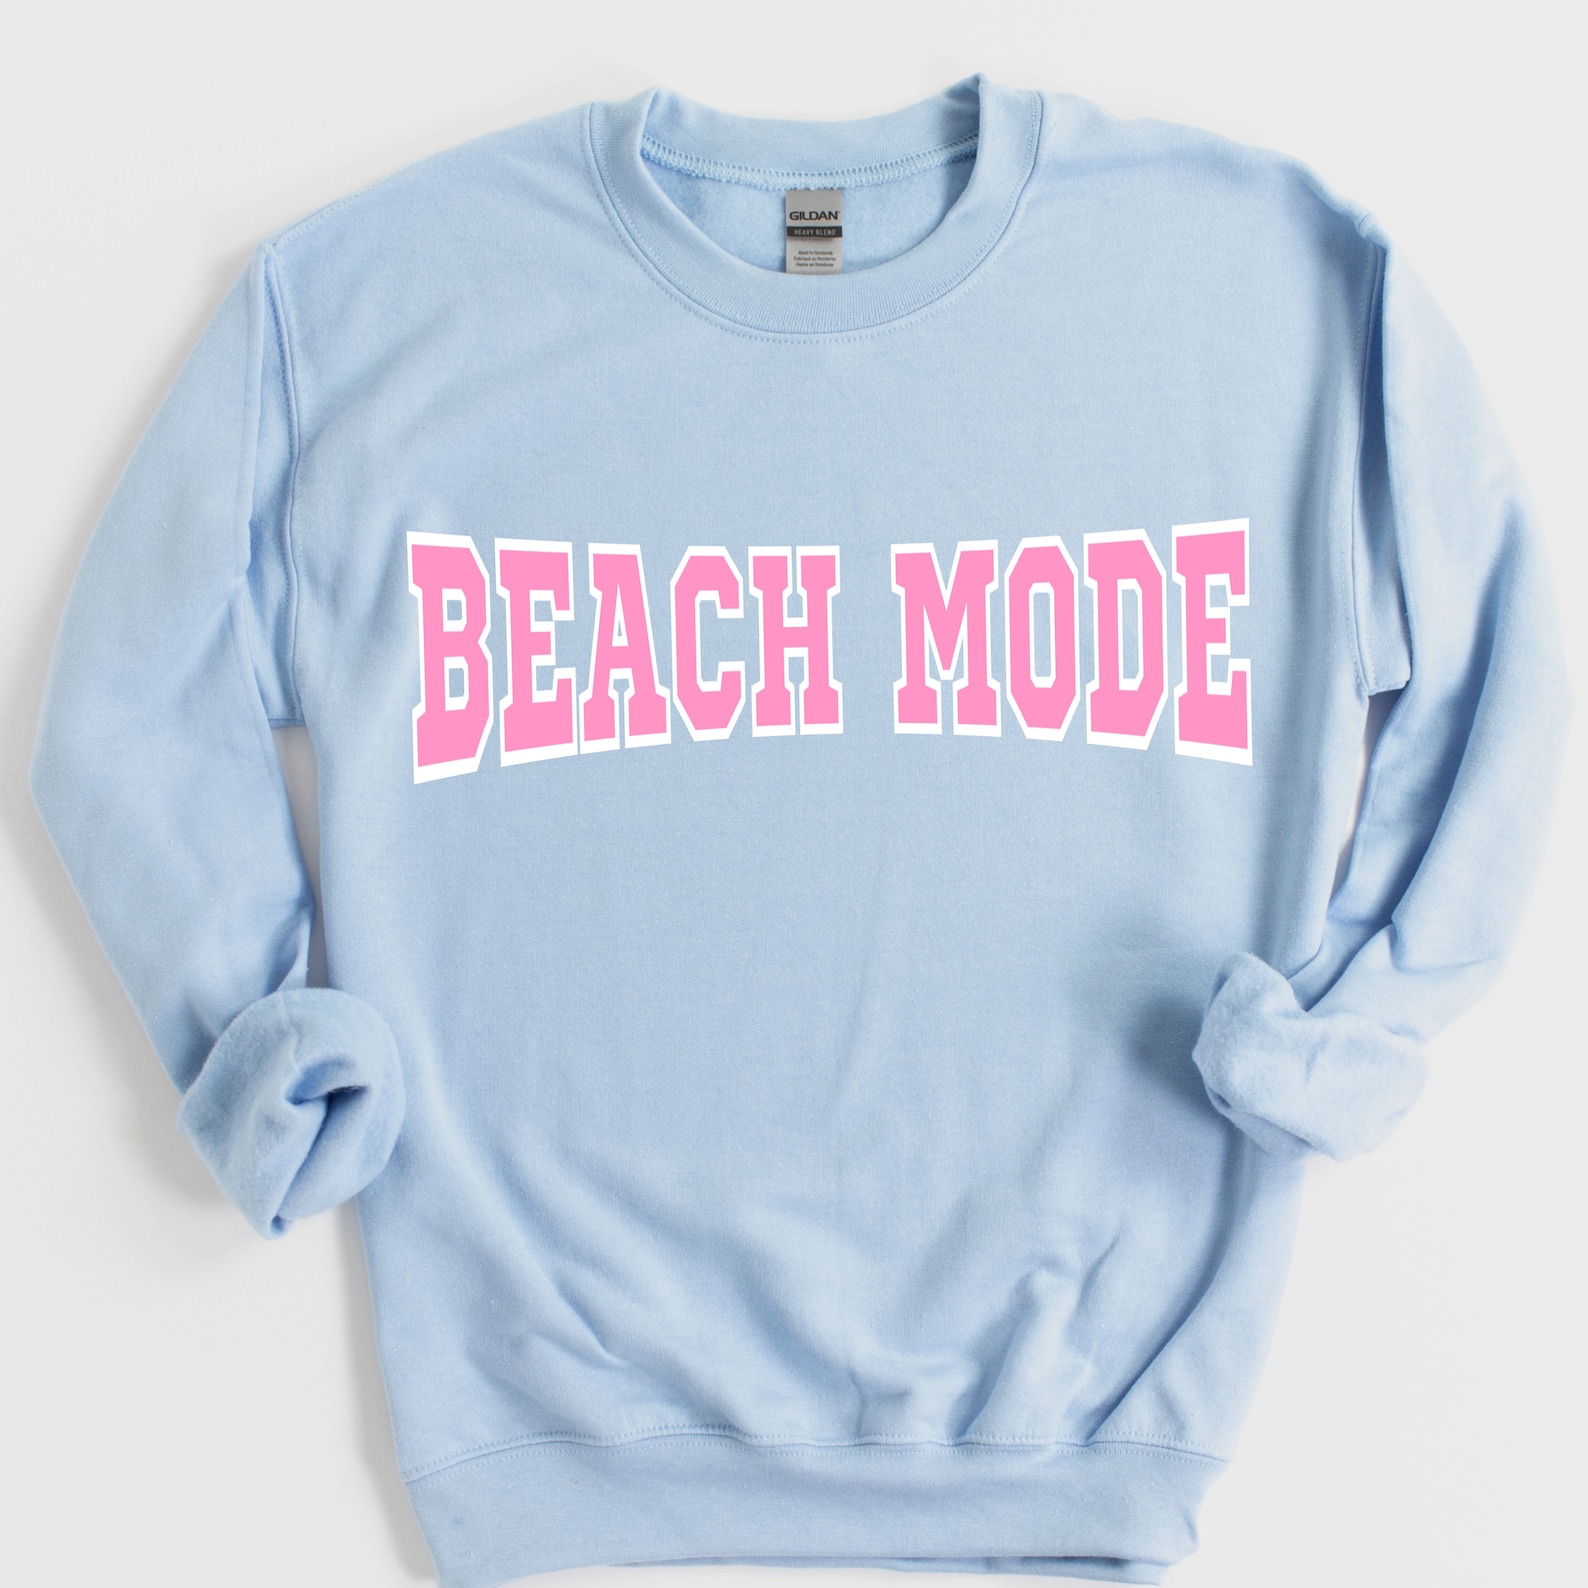 Beach sweatshirts